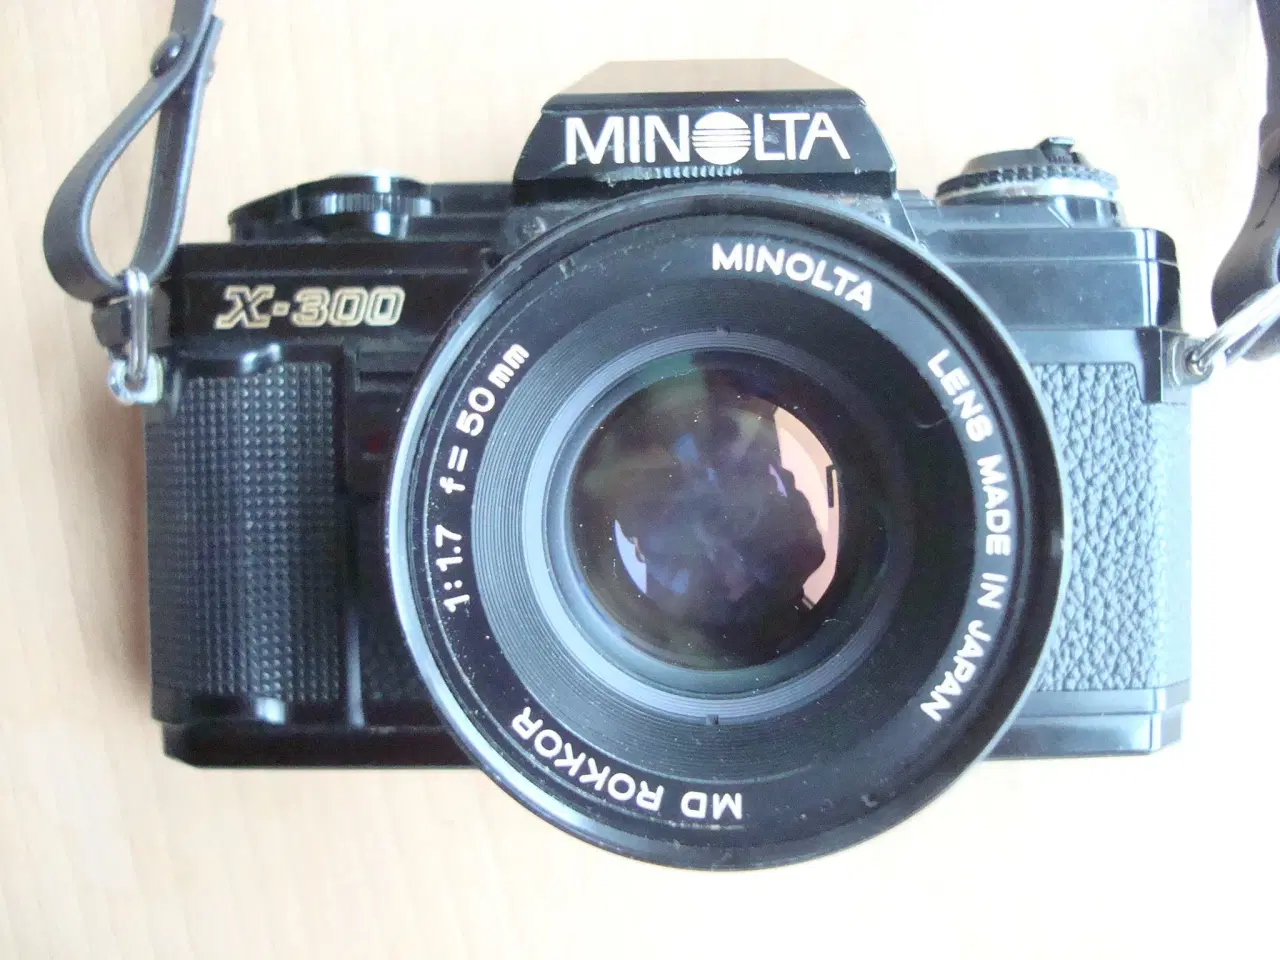 Billede 1 - Minolta X-300 sort m 50/1.7 MD Rokkor